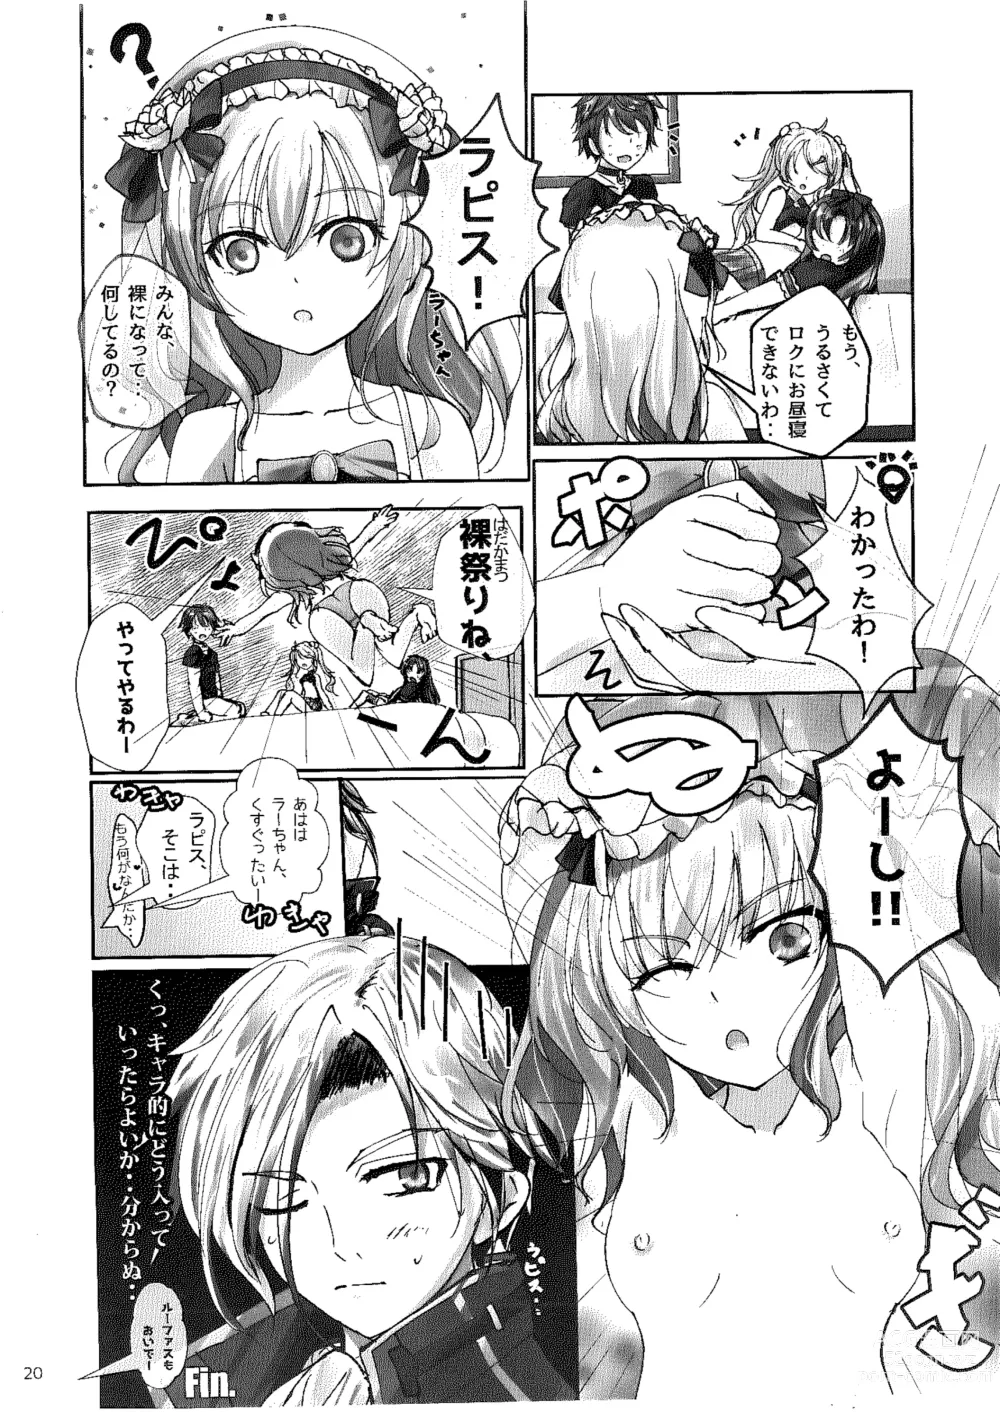 Page 19 of doujinshi Ren no Hajimari